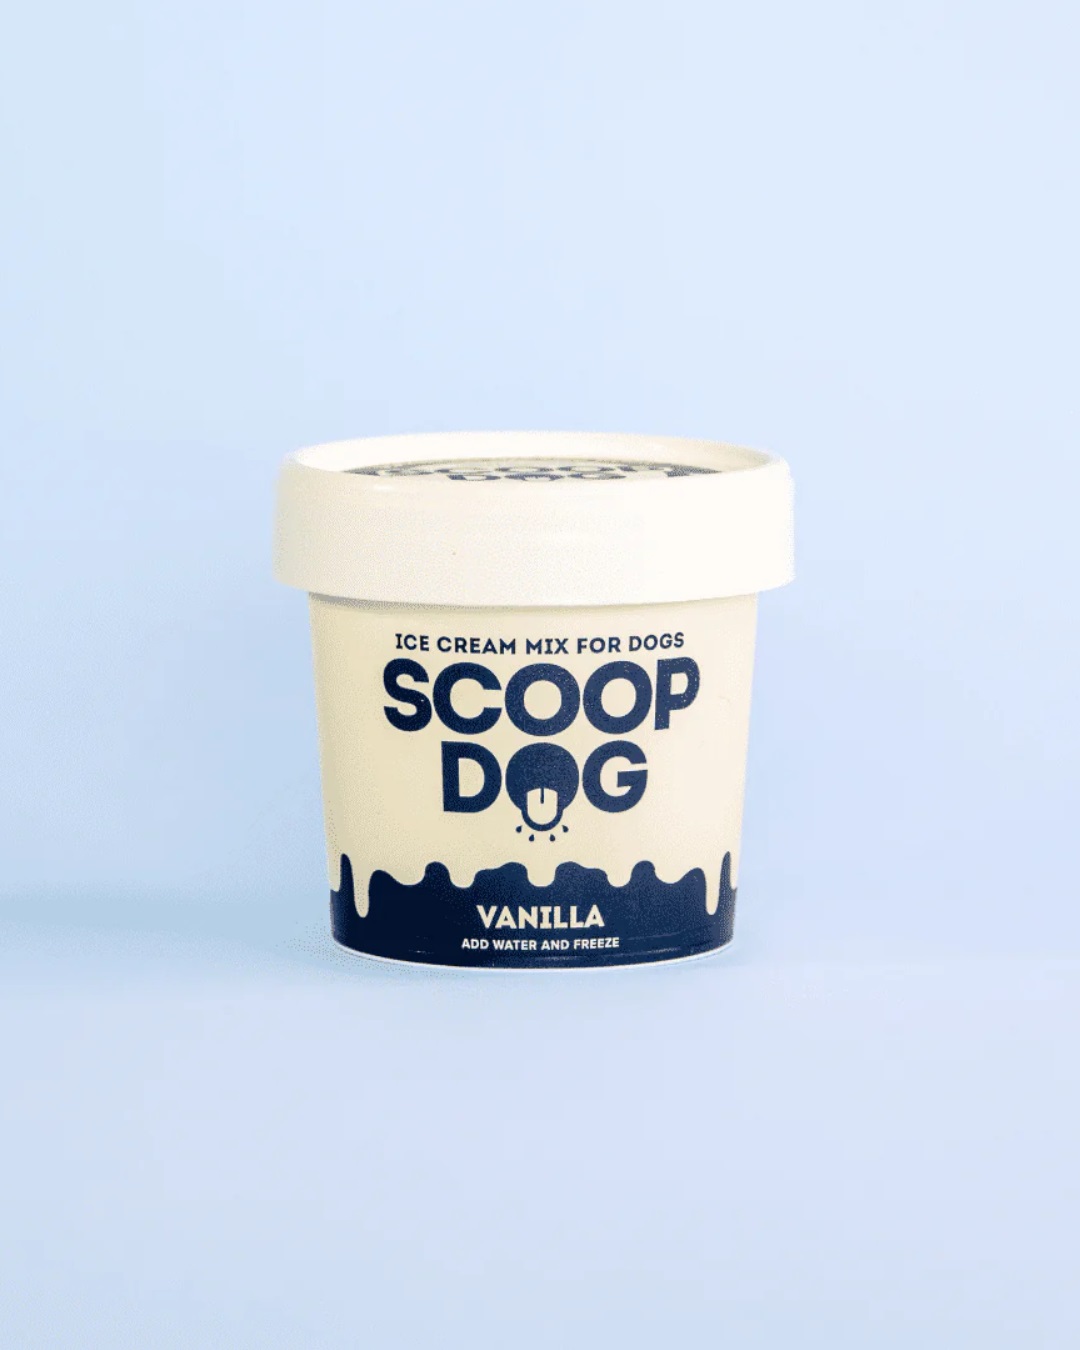 Scoop dog vanilla ice cream container with blue background